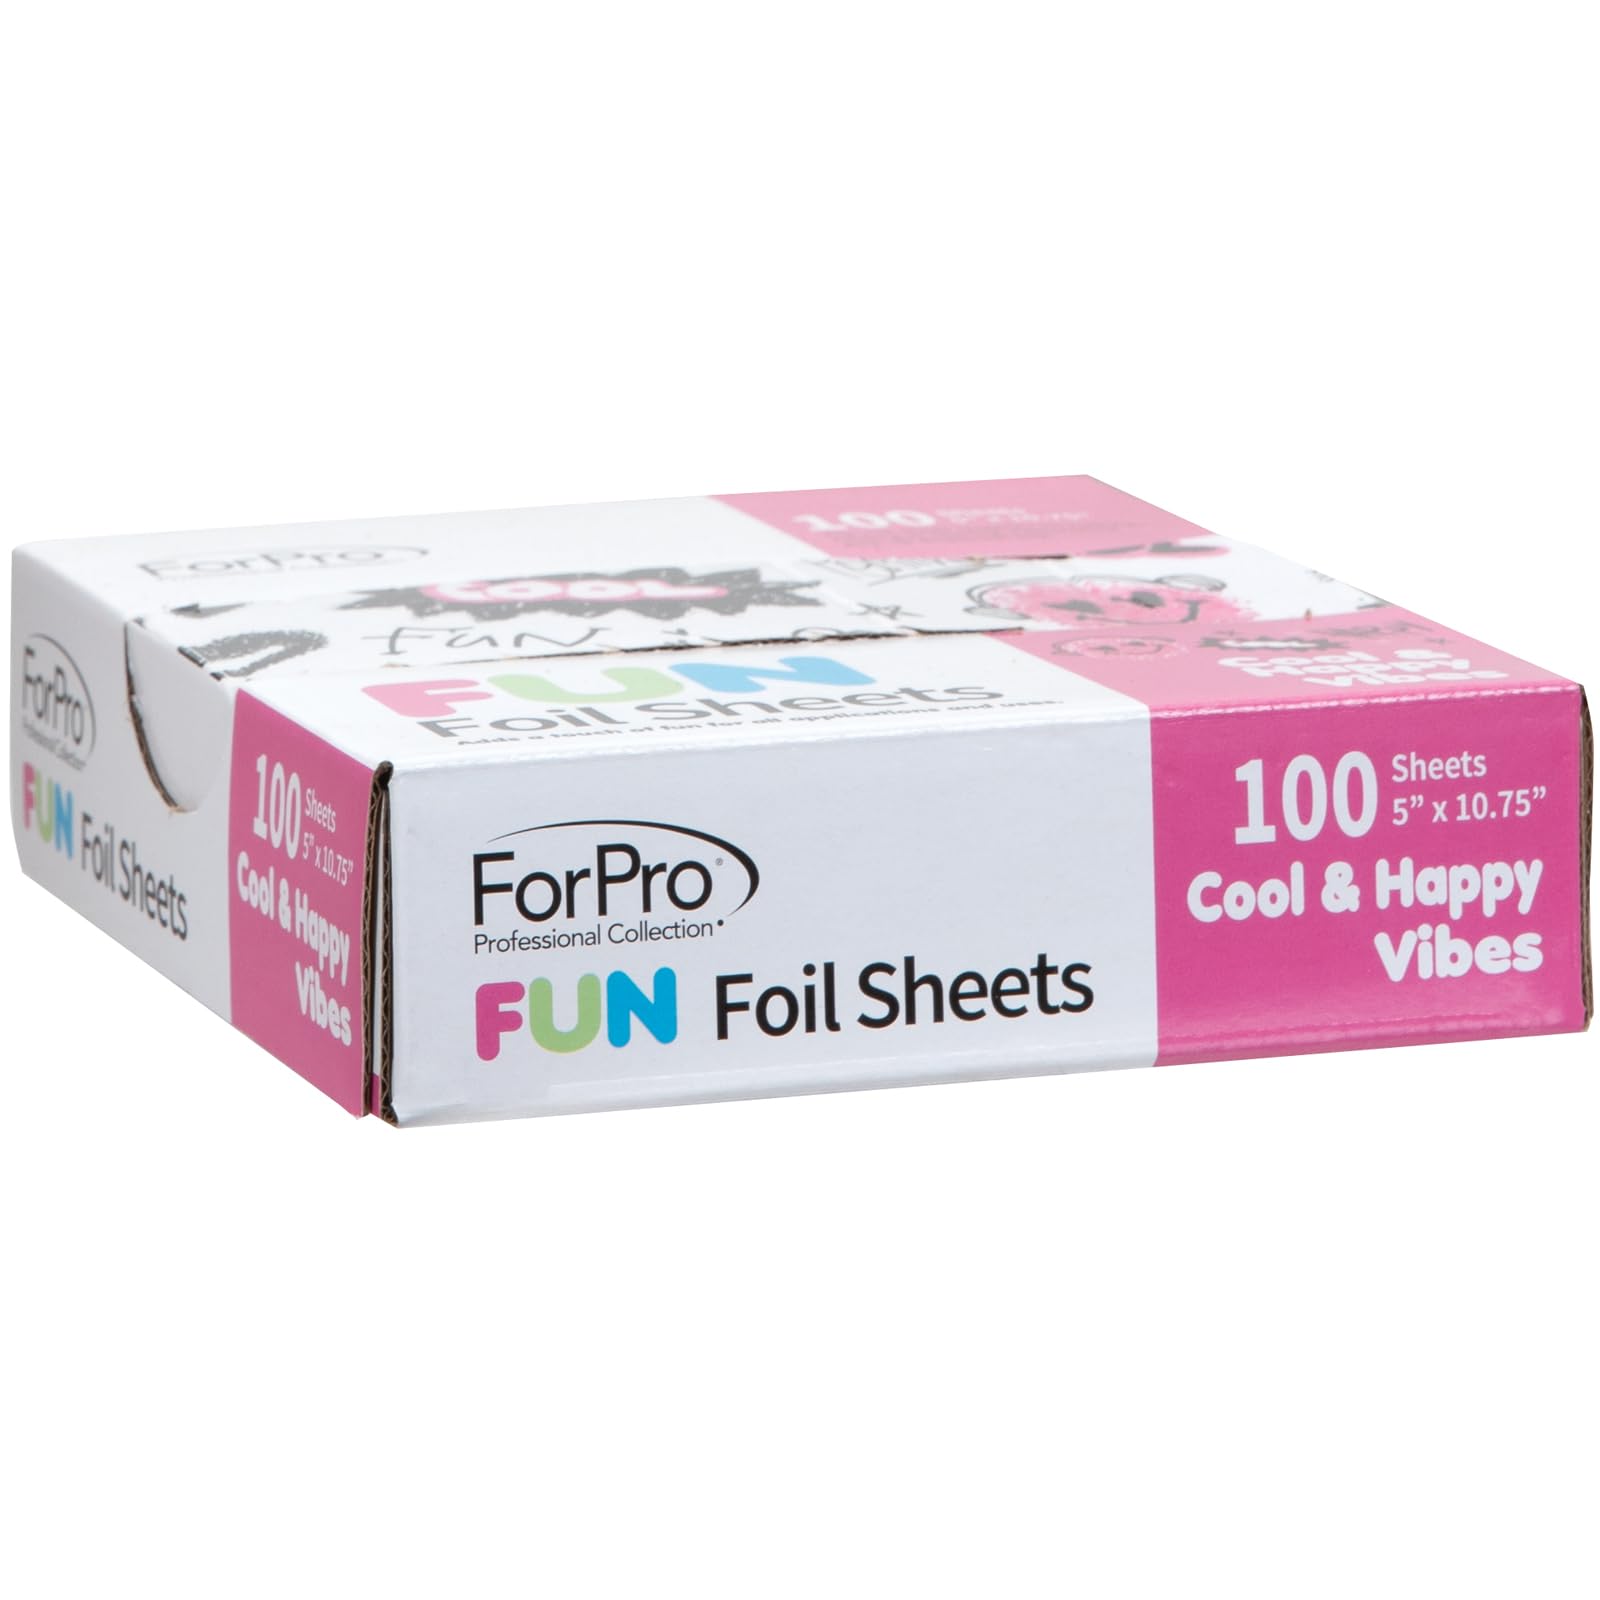 ForPro FUN Cool & Happy Vibes Foil Sheets, Aluminum Foil, Pop-Up Foil Dispenser, Hair Foils for Color Application and Highlighting Services, Food Safe, 5” W x 10.75” L, 100-Count